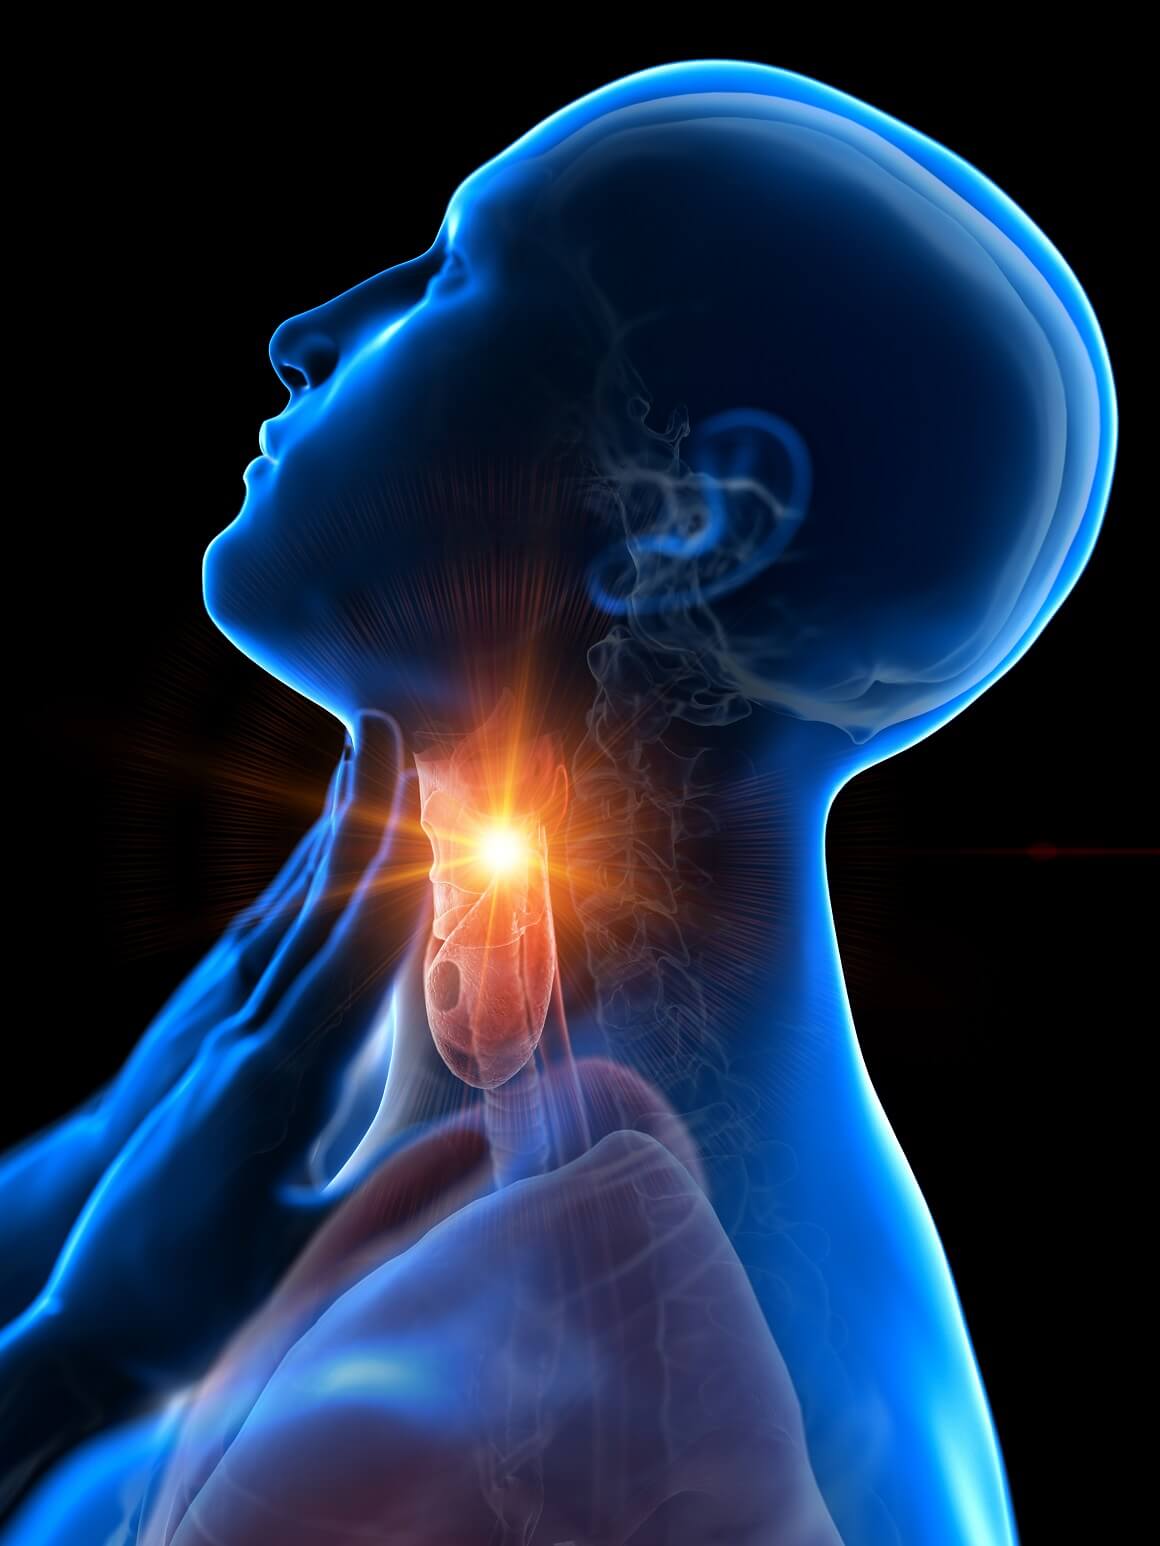 Akutna upala grla (tonzilitis, faringitis) najčešća je streptokokna infekcija